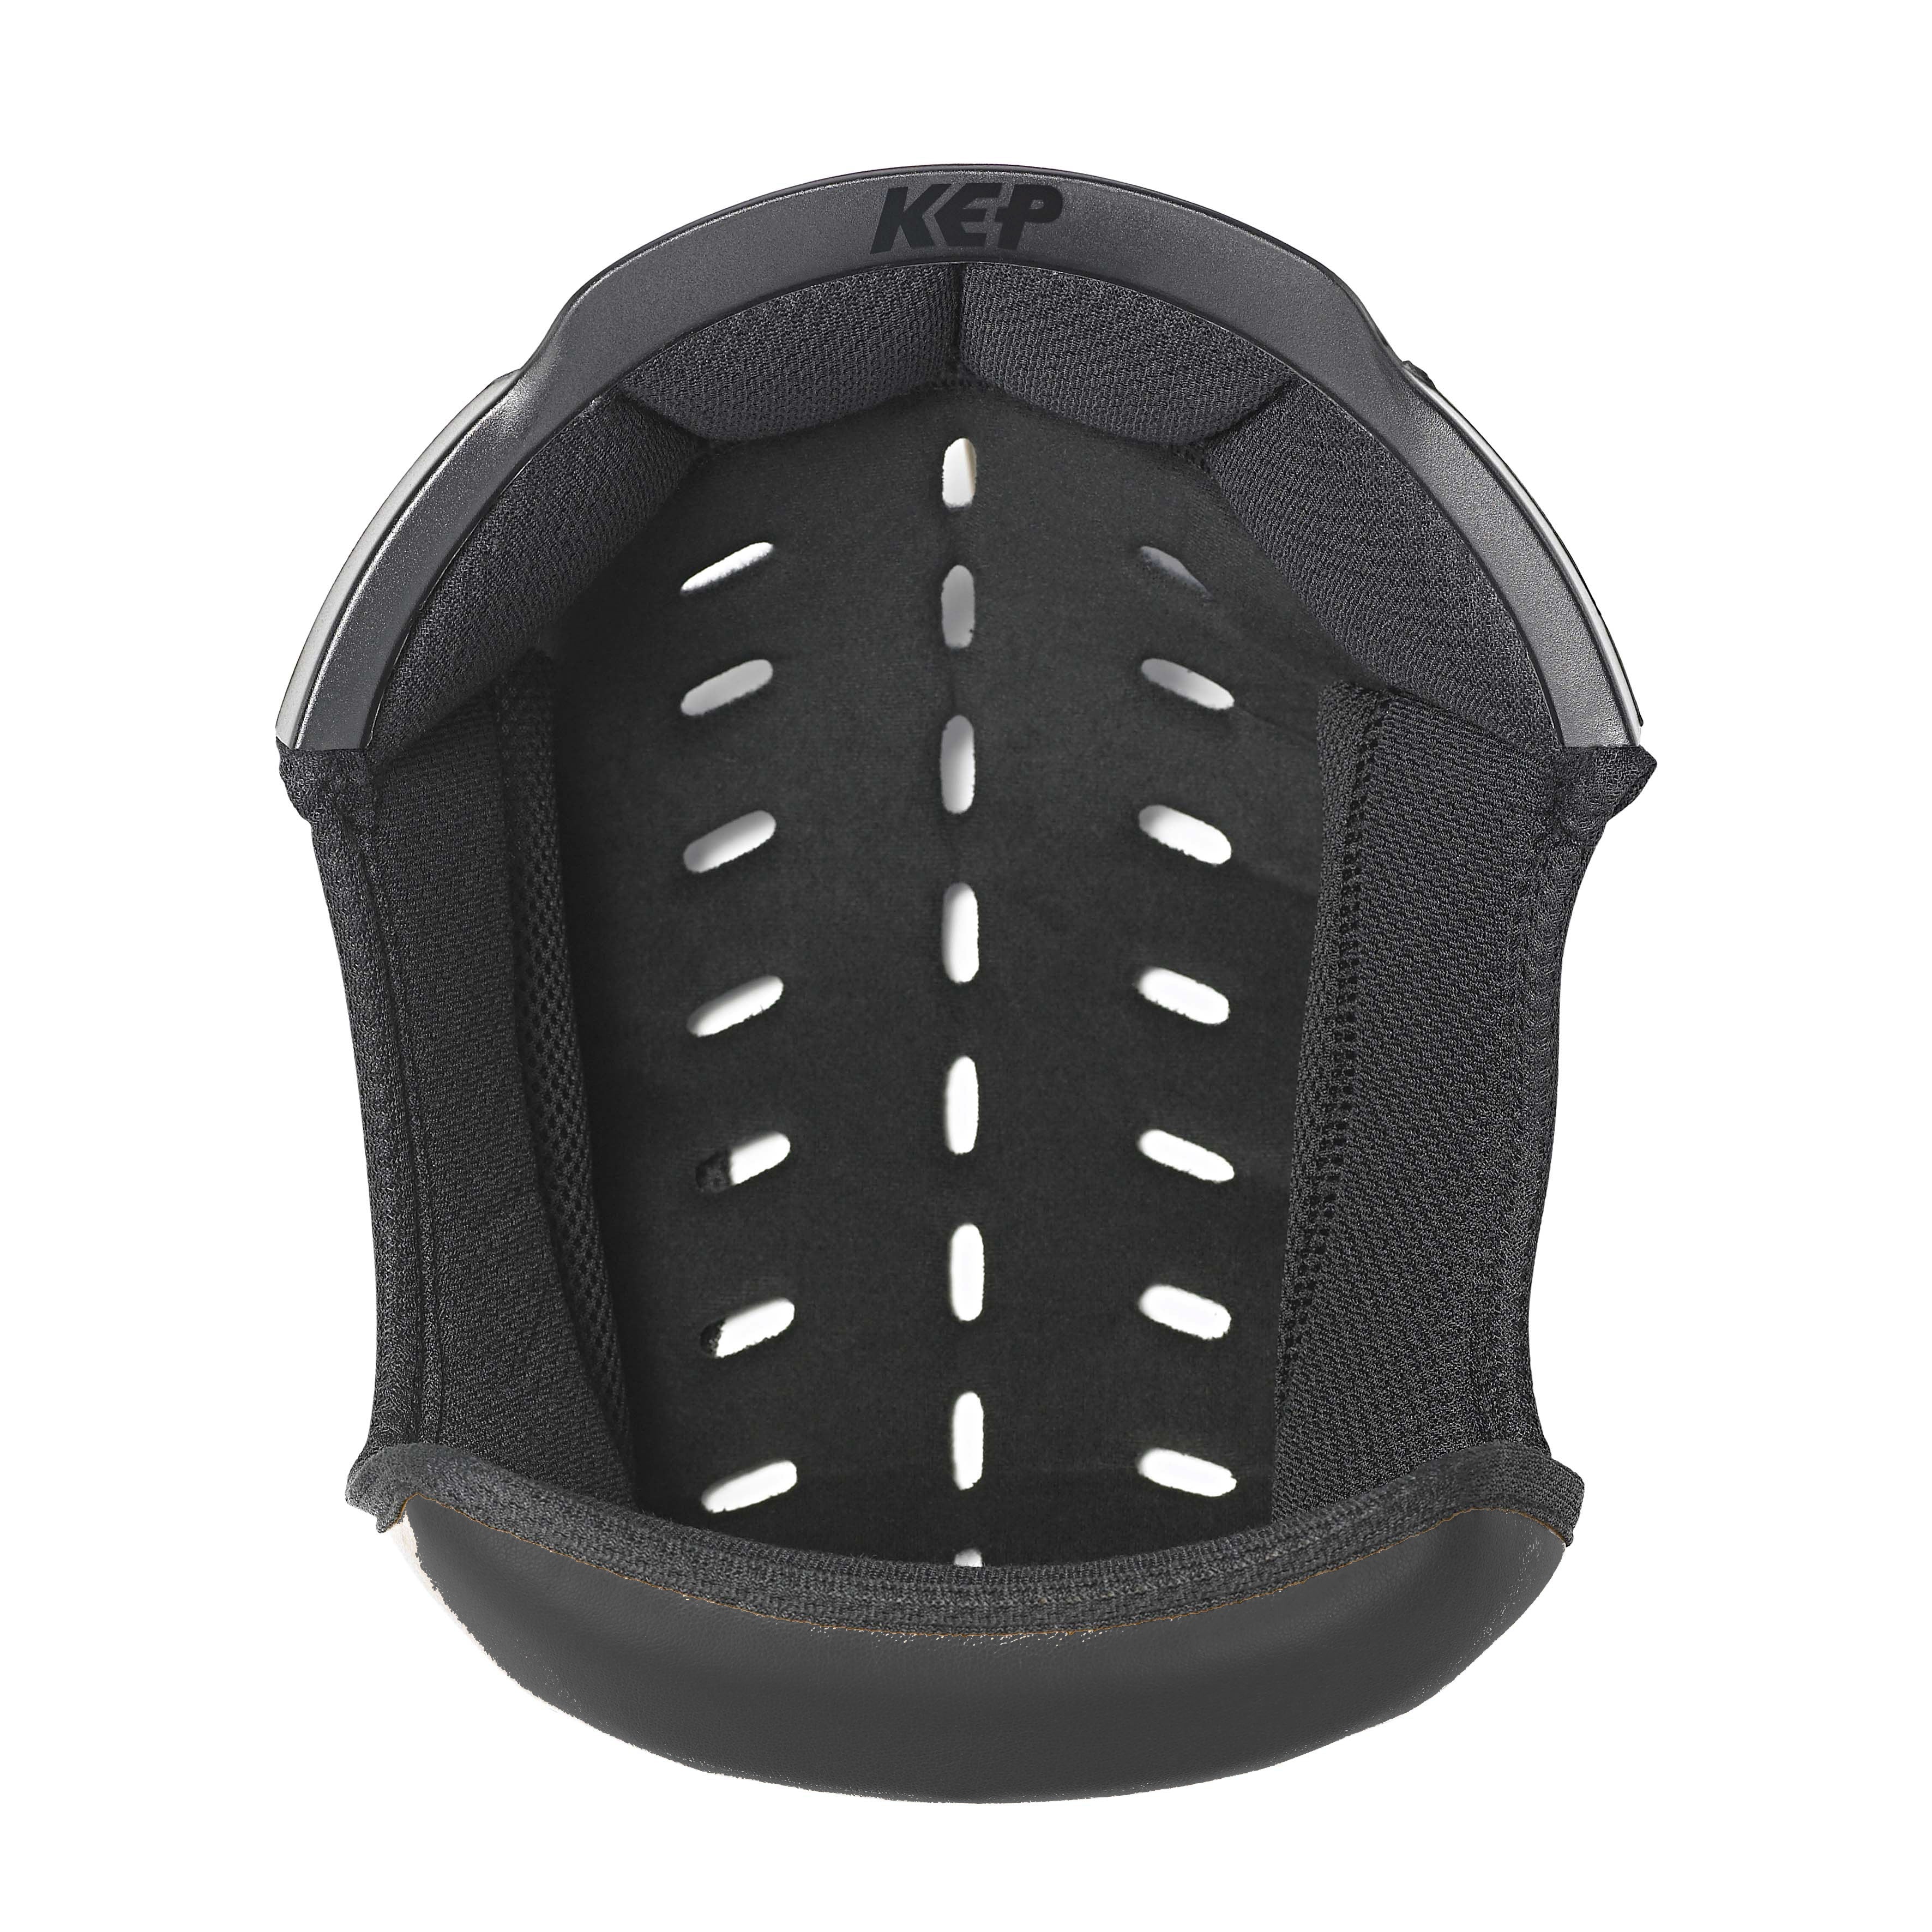 Kep Riding Hat Lining - Rider Comfort - Medium - Black